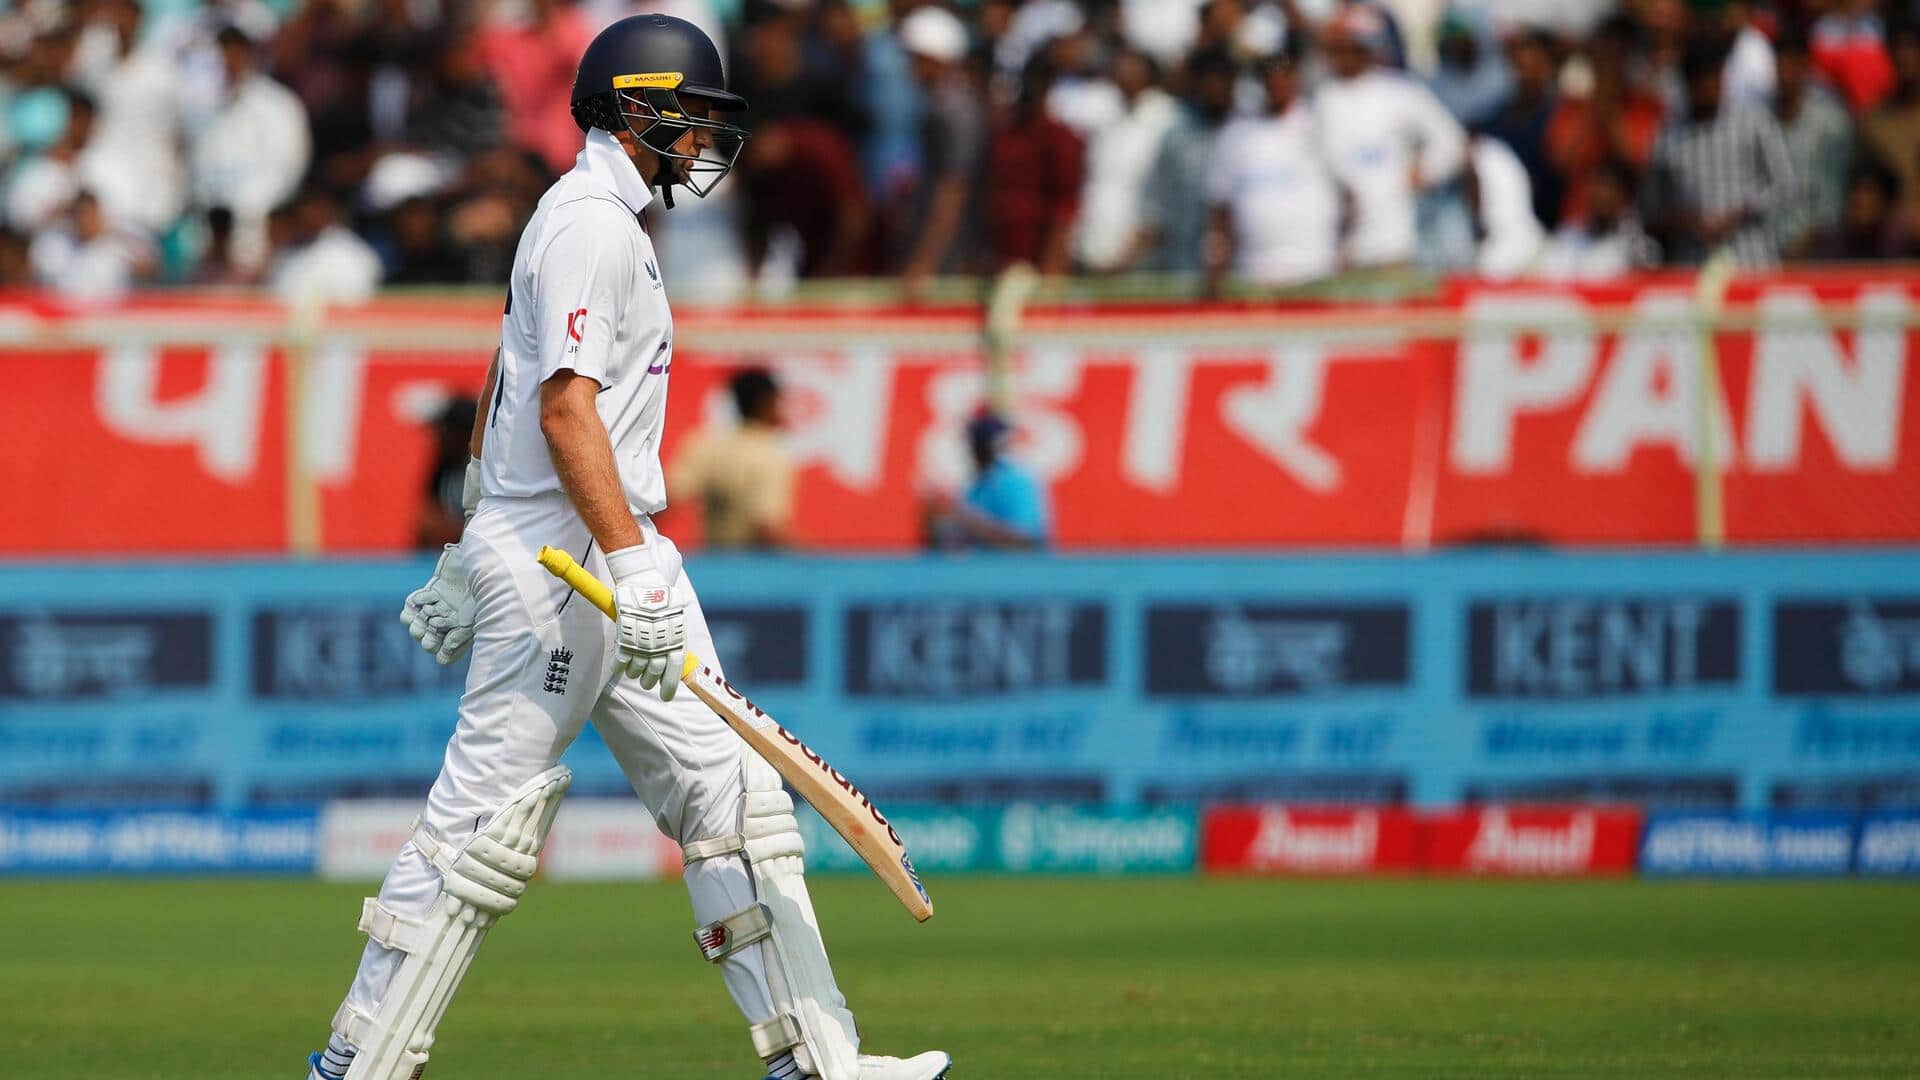 Joe Root has struggled against Jasprit Bumrah in Tests: Stats